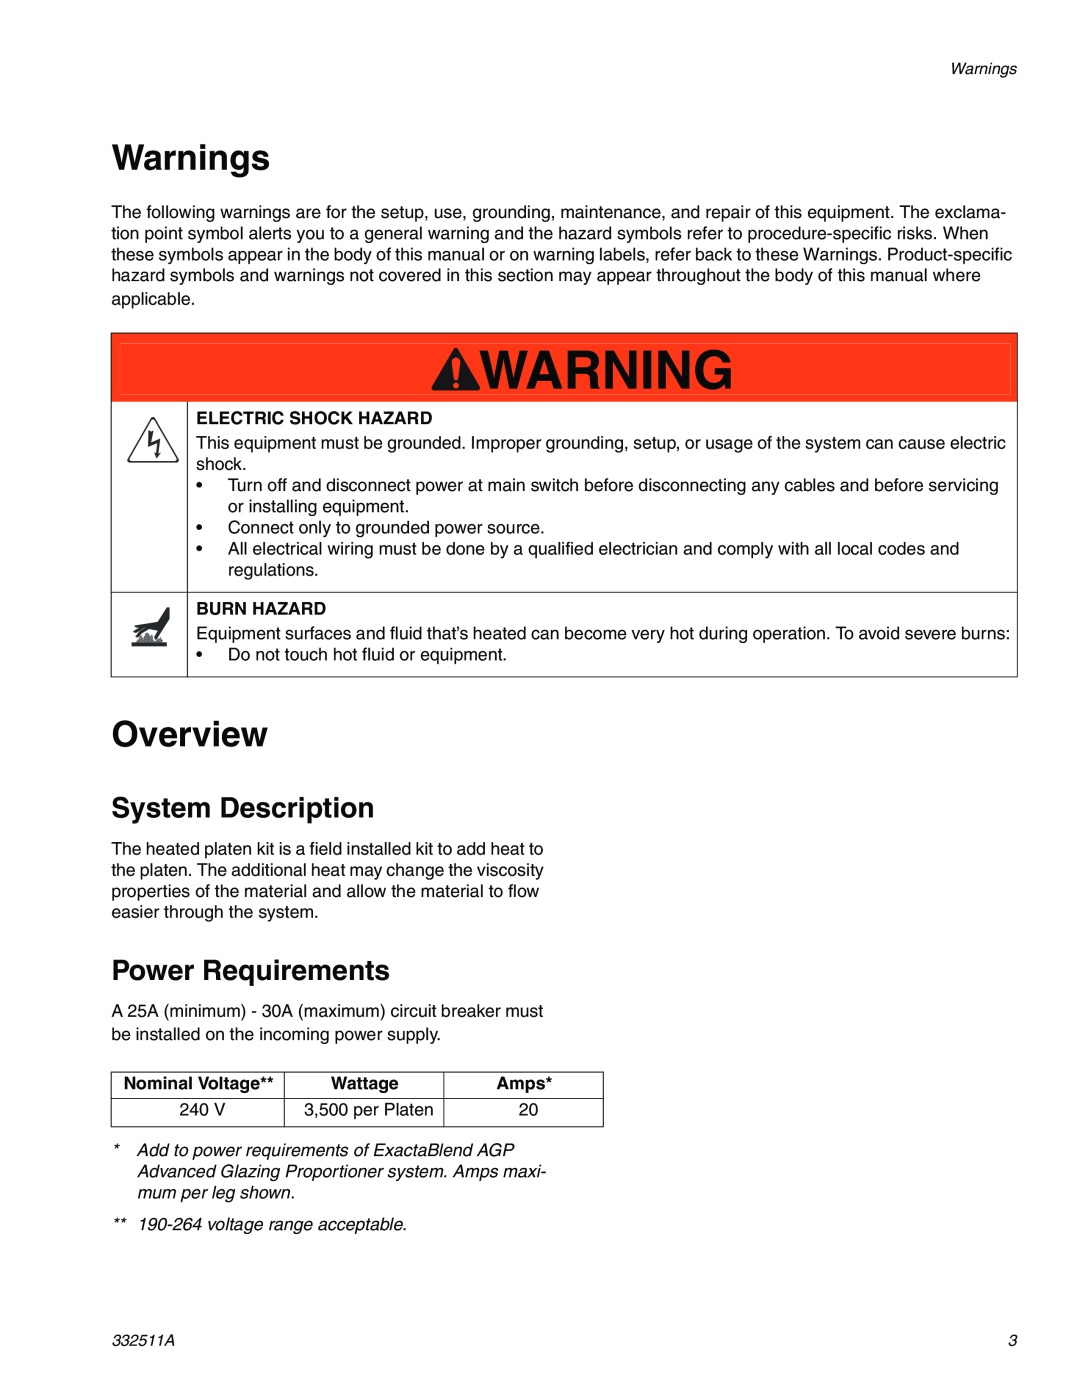 Graco 24R200 Warnings, Overview, System Description, Power Requirements, Electric Shock Hazard, Burn Hazard, Wattage, Amps 